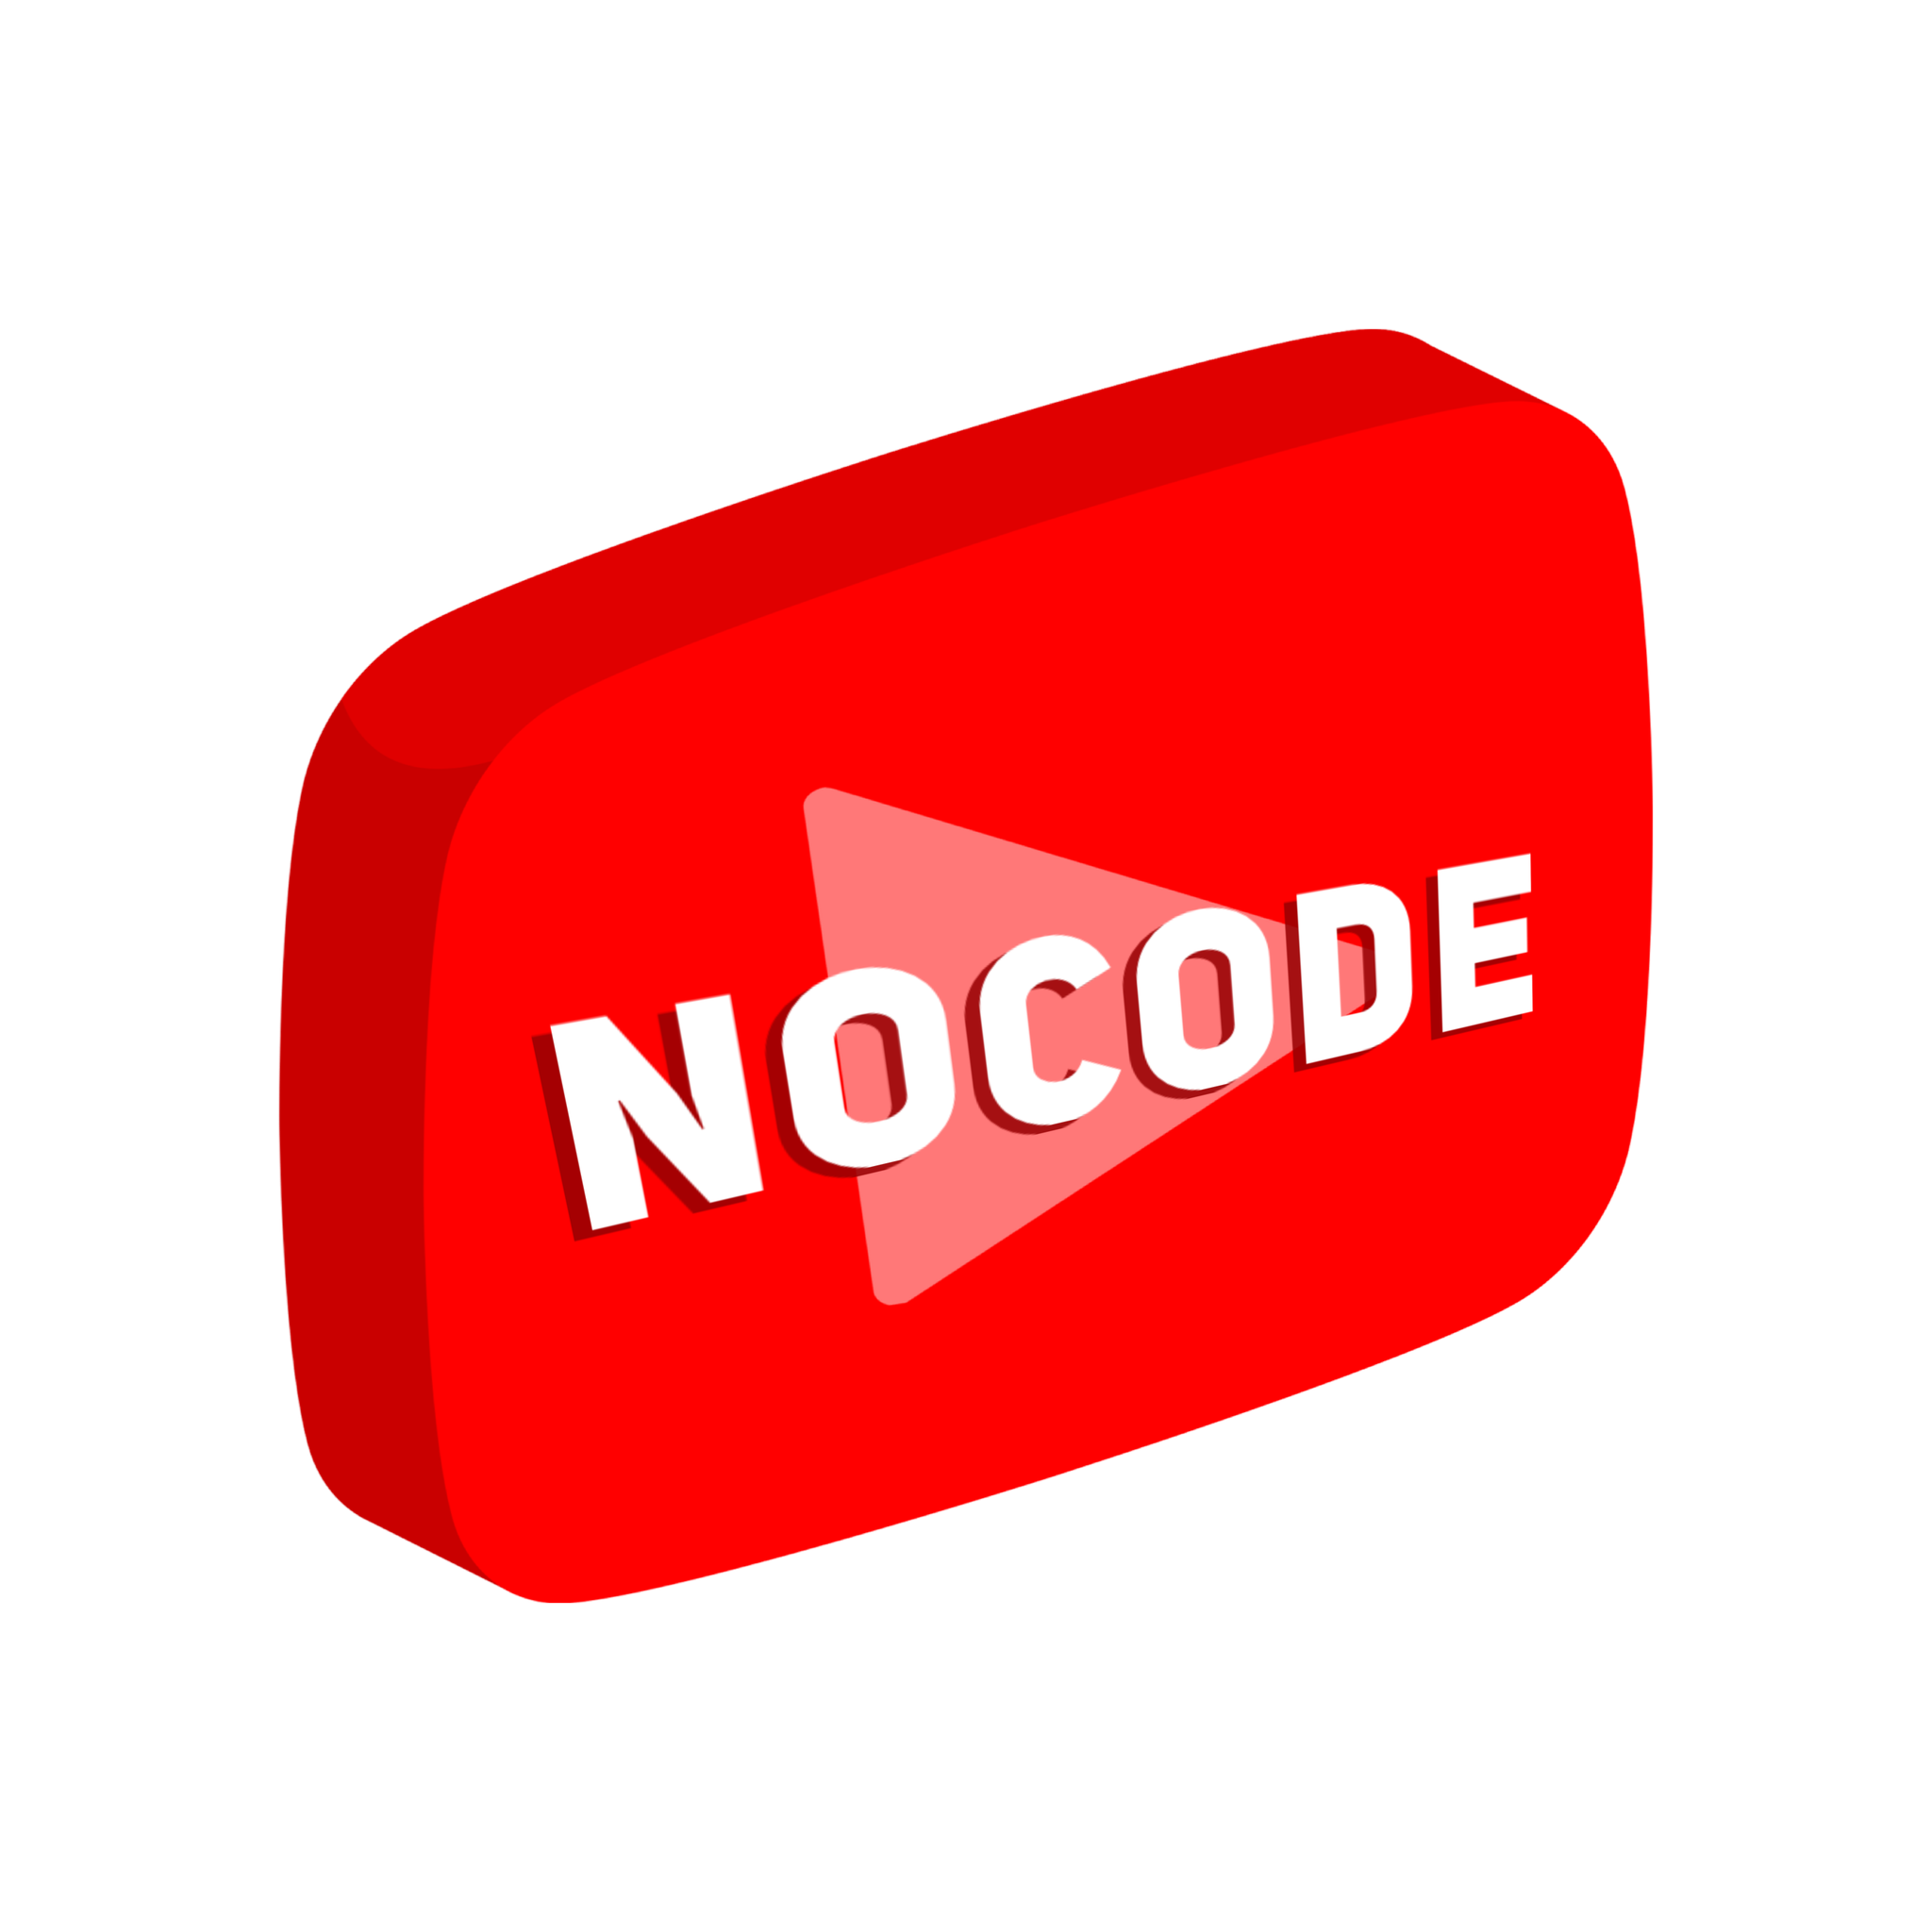 NoCode Tube